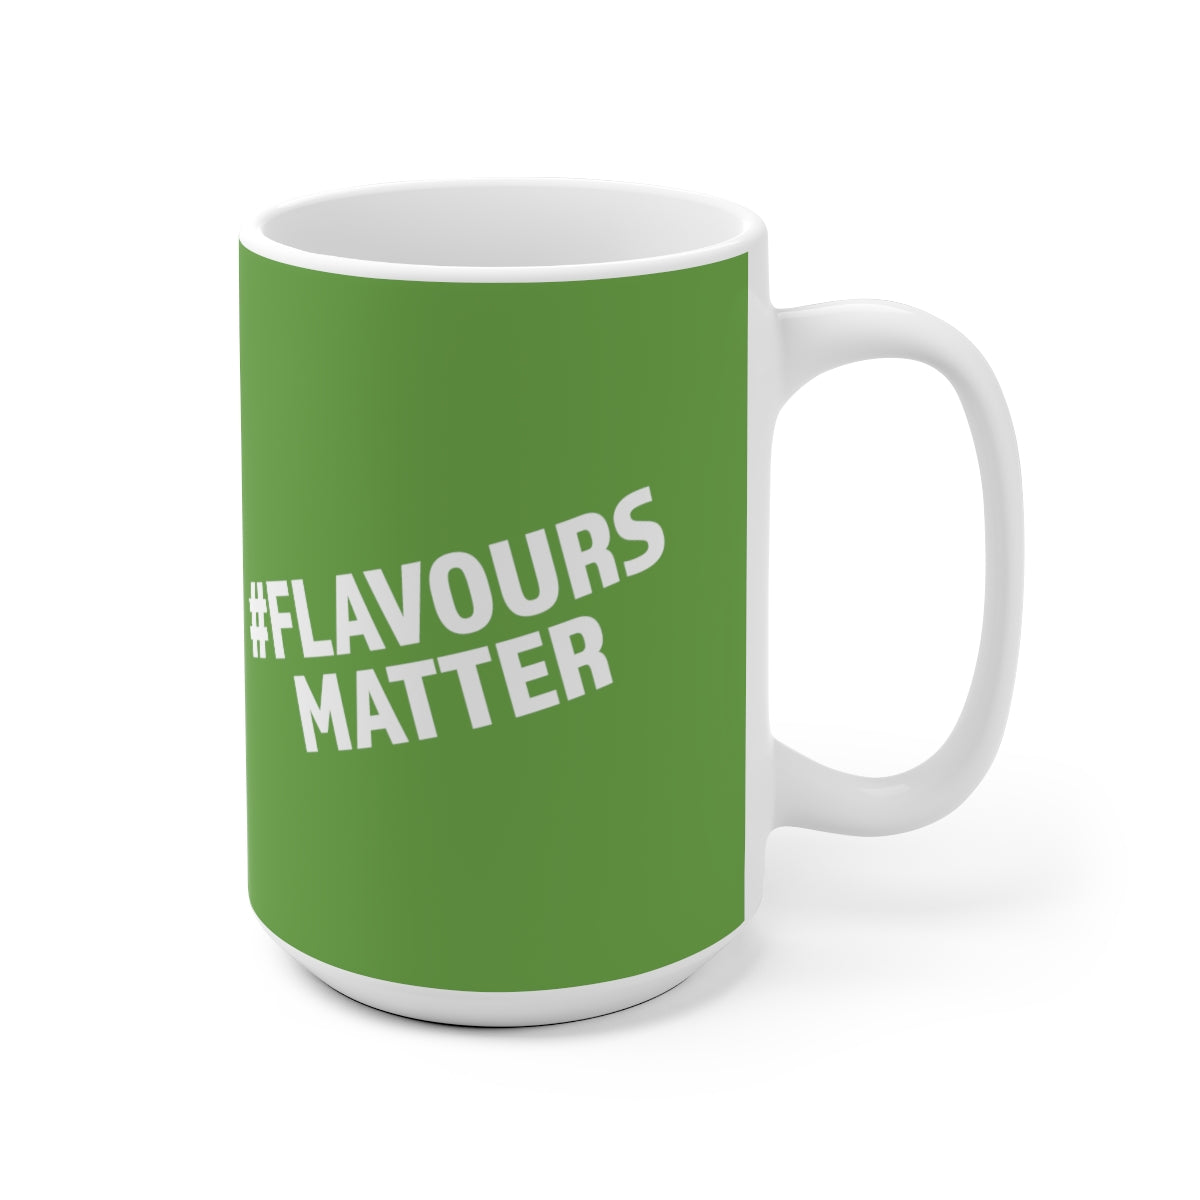 WVA Flavours Matter Green Ceramic Mug (EU only)